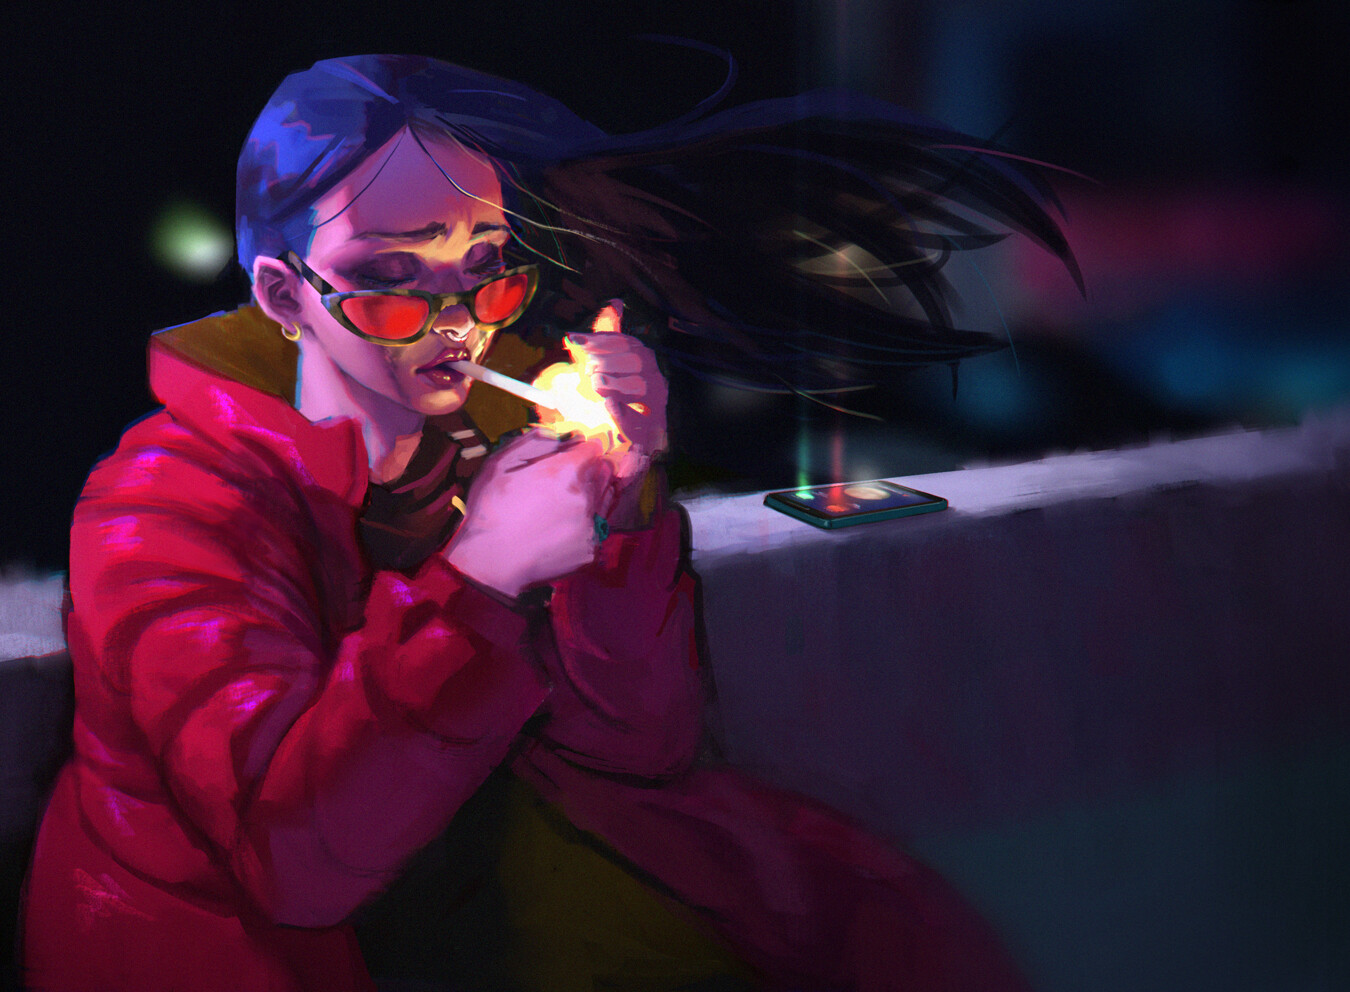 Фото Девушка зажигает сигарету, а рядом звонит телефон, by Enzo Fernandez